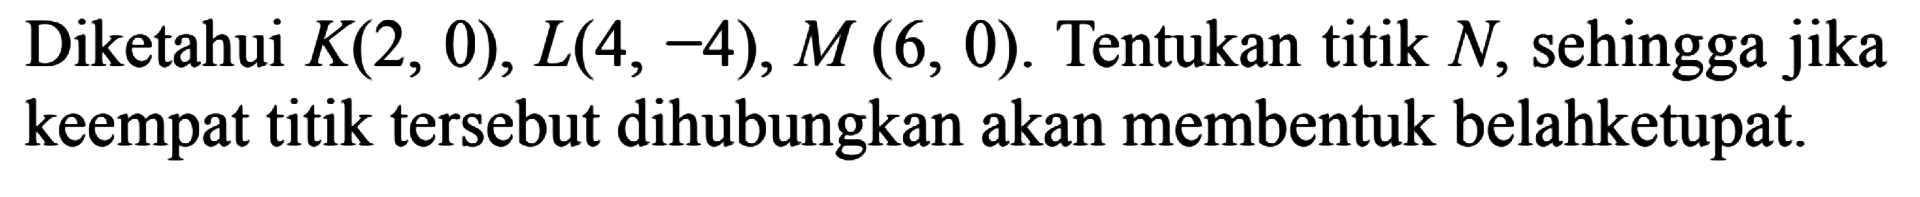 Diketahui K(2, 0), L(4, -4), M (6, 0). Tentukan titik N, sehingga jika keempat titik tersebut dihubungkan akan membentuk belahketupat.